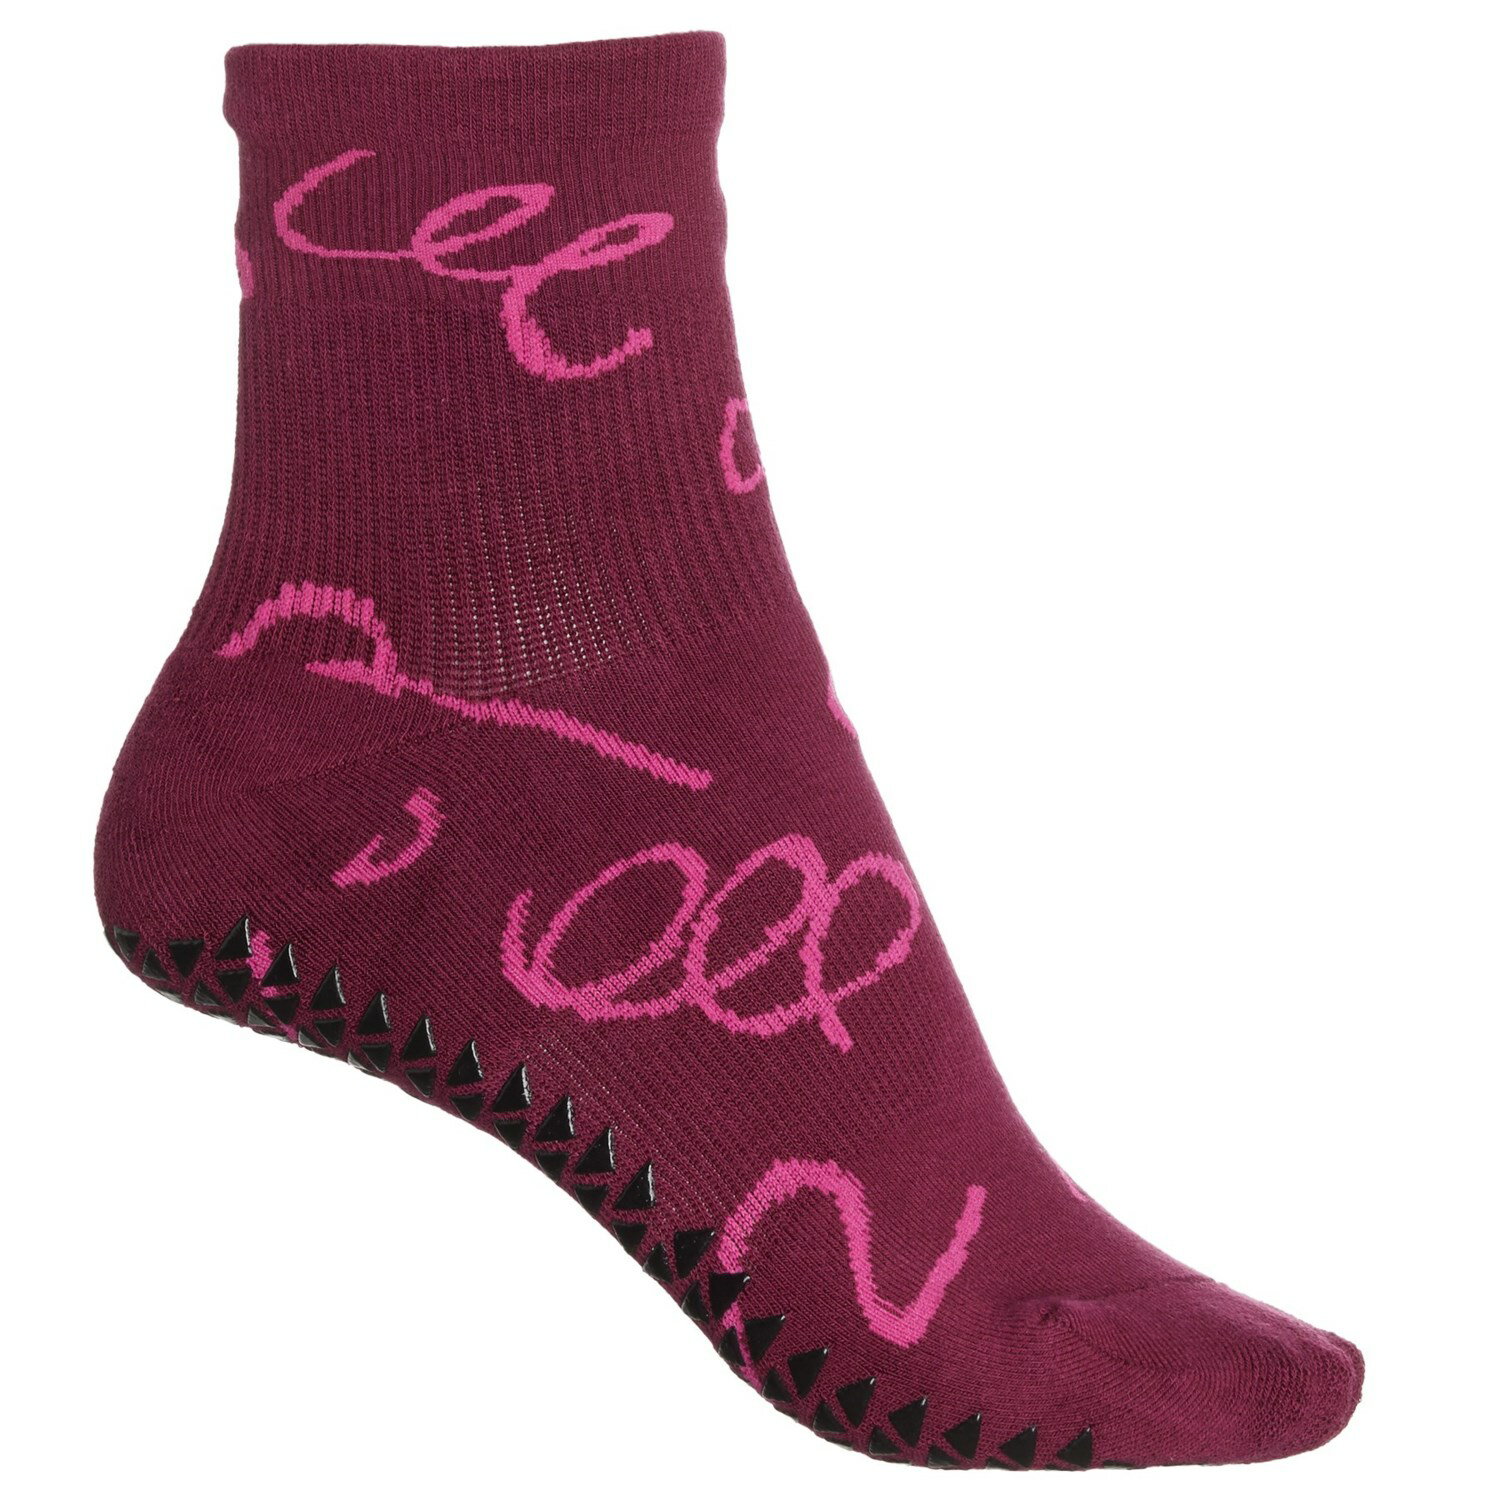 () fB[X ~fBA-[W - xbJ \bNX Pointe Studio women Medium-Large - Becca Socks (For Women) Purple Pink